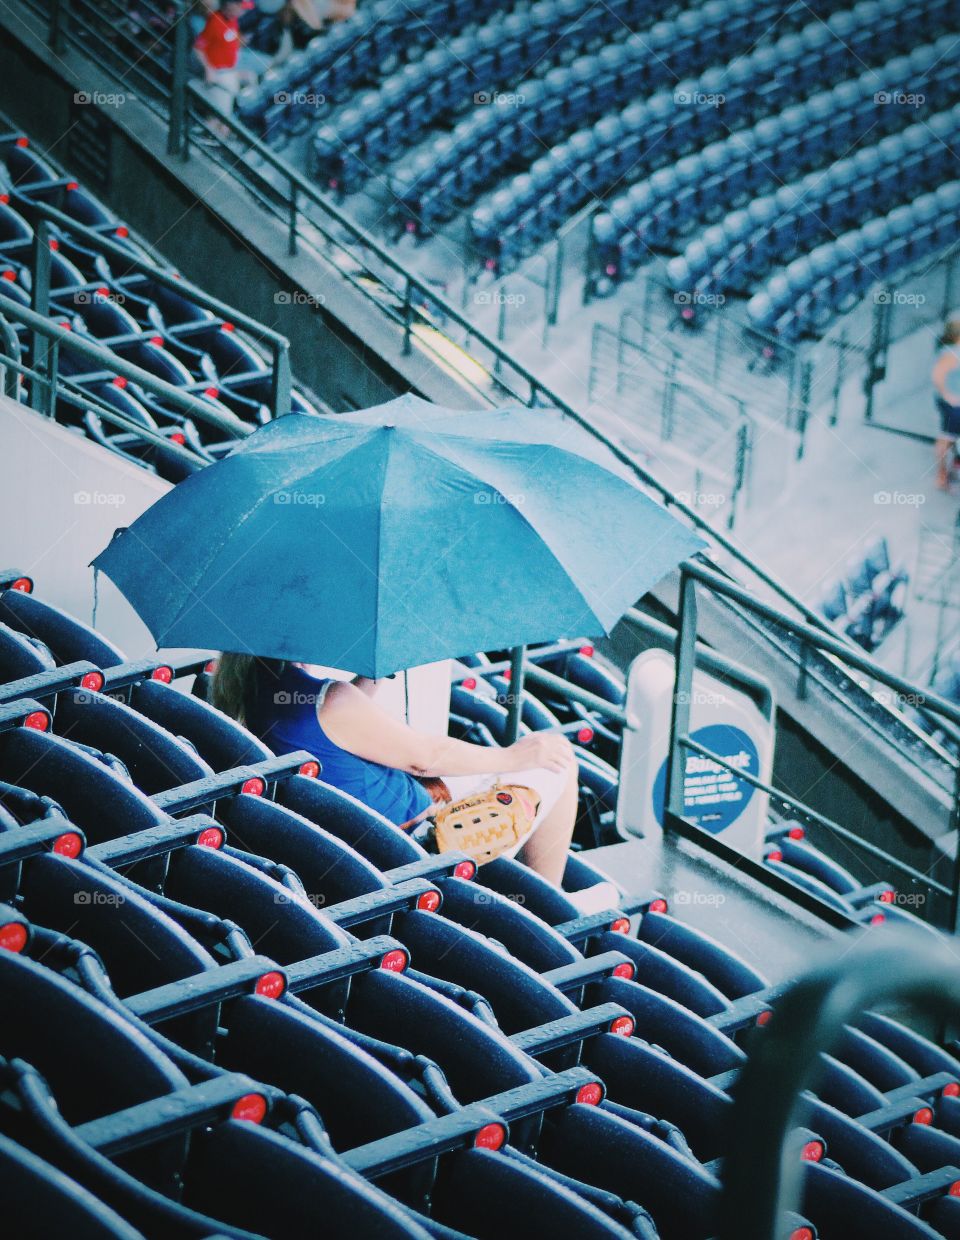 Sports fan in stadium on rainy day 